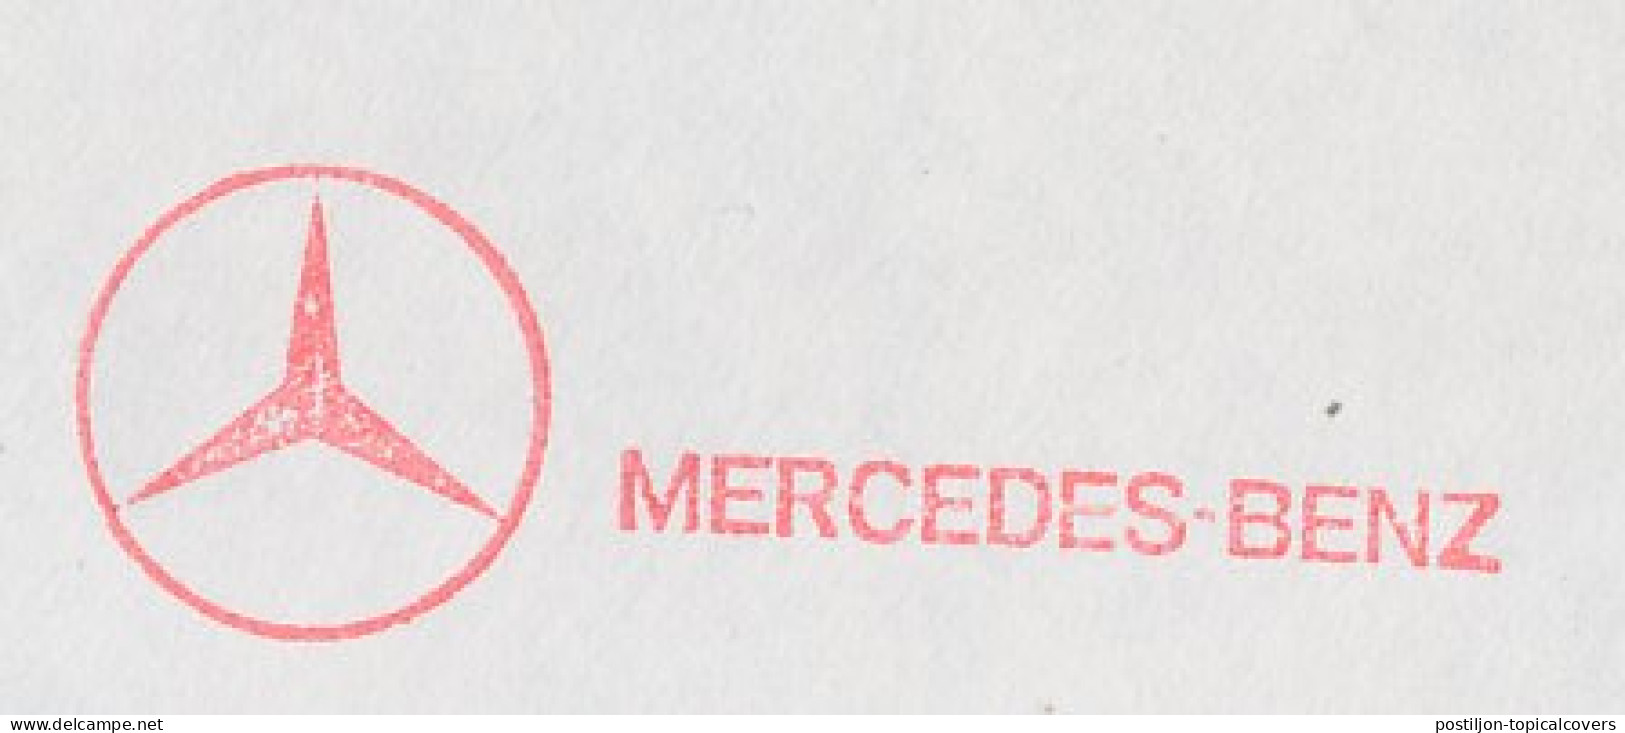 Meter Cover Netherlands 1990 Car - Mercedes Benz  - Cars